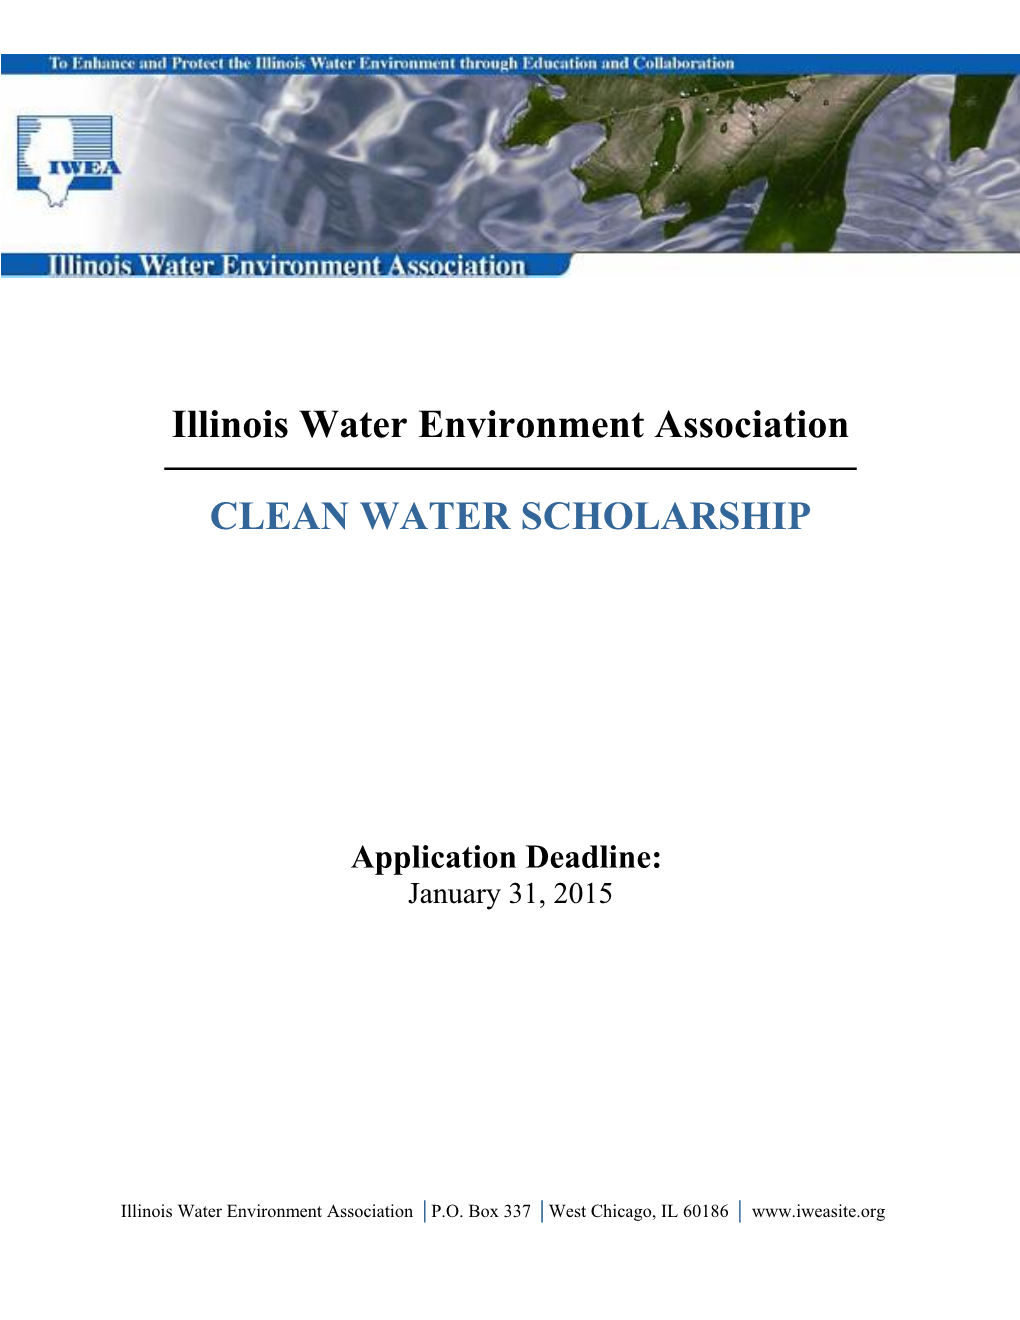 Illinois Water Environment Association